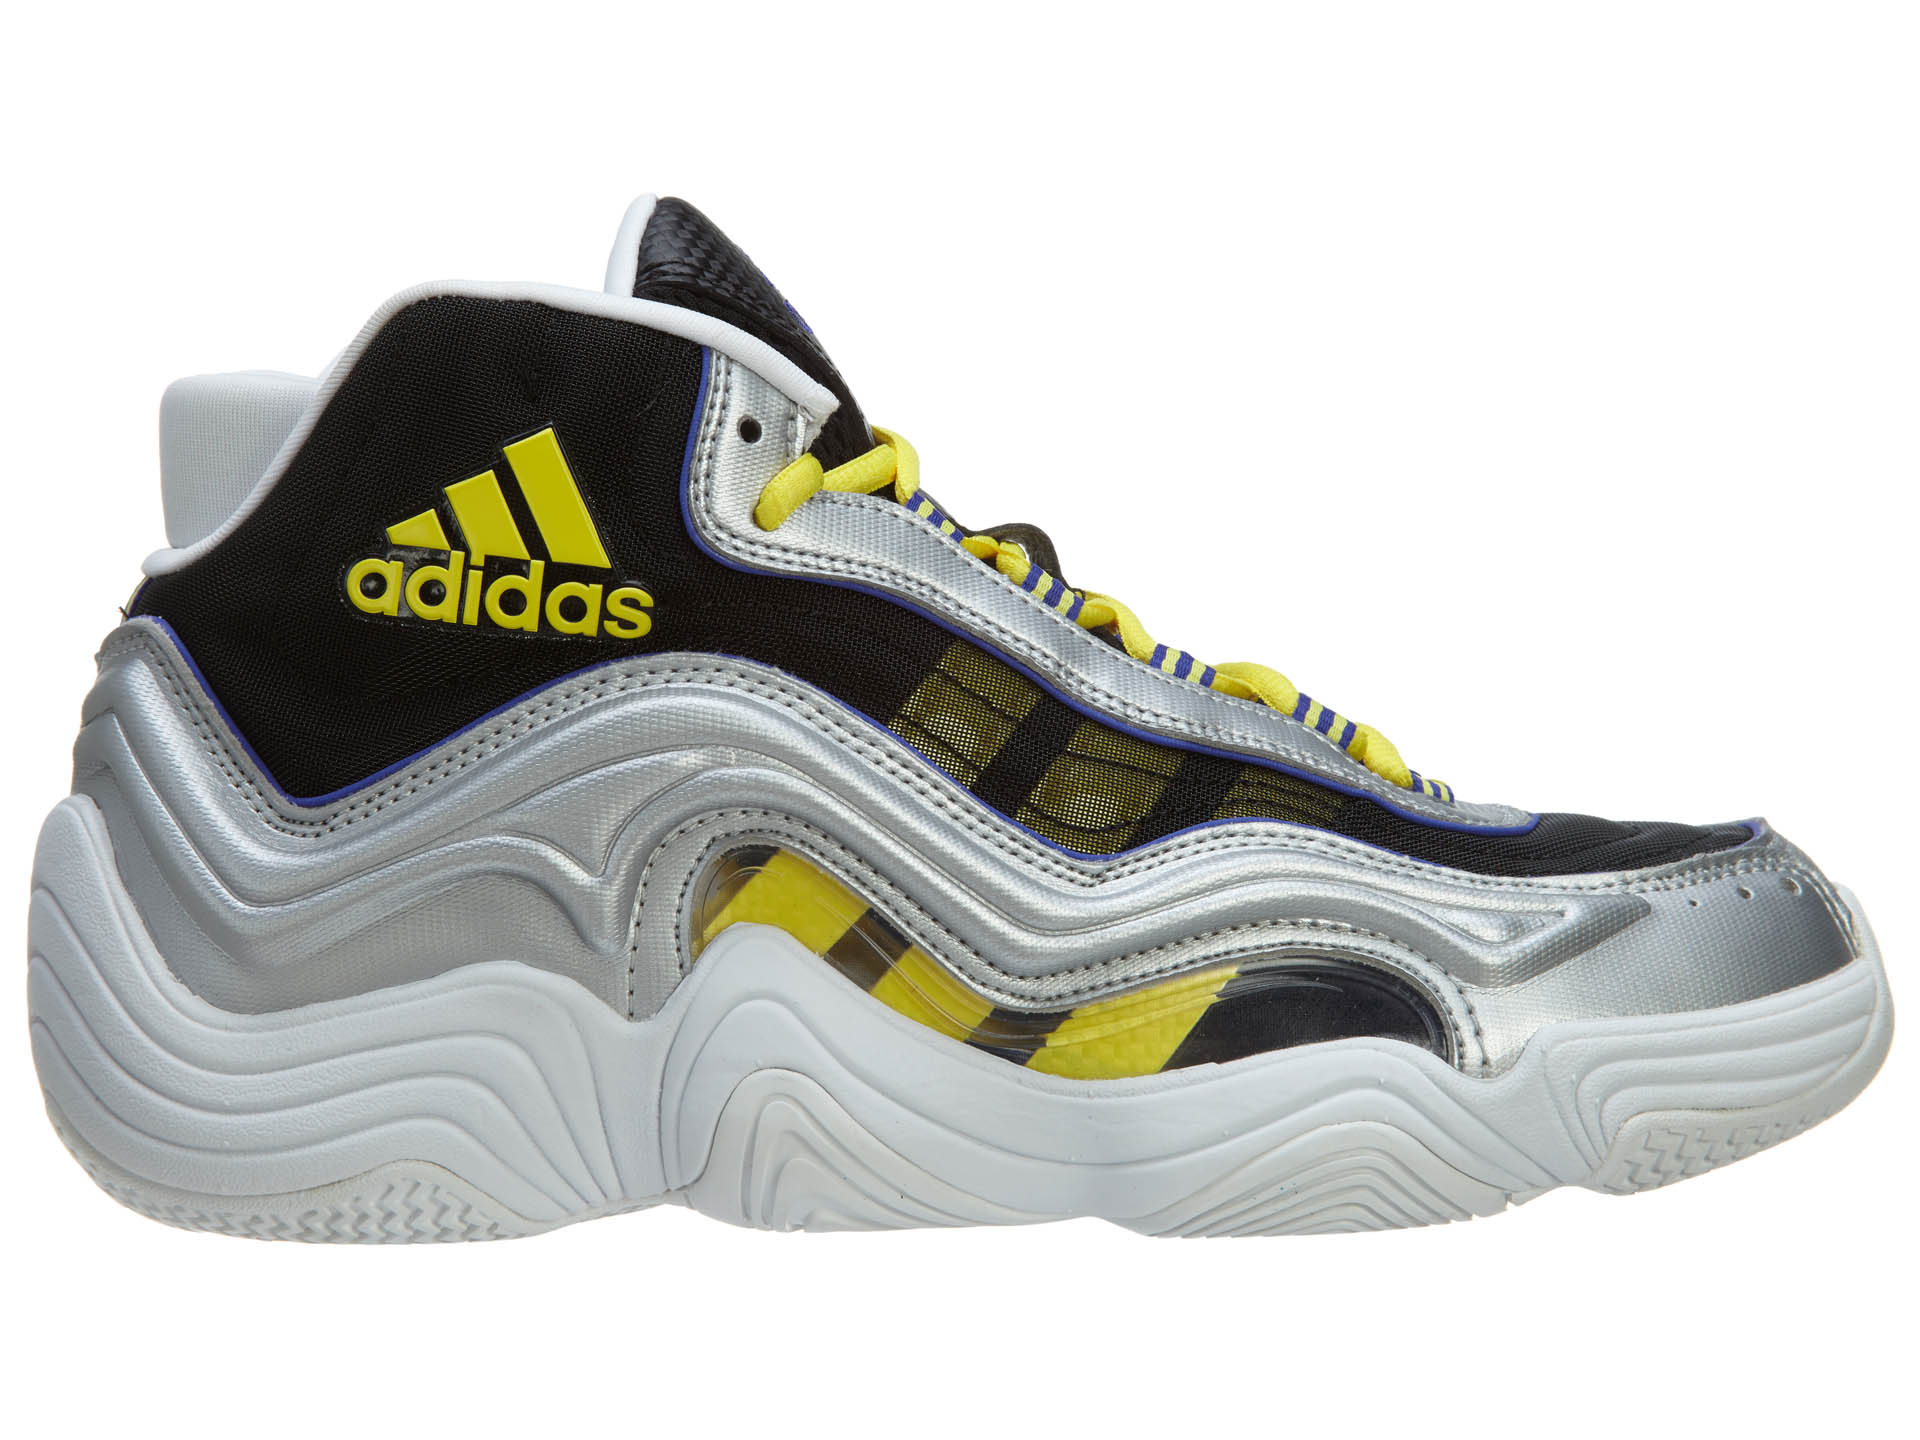 adidas Crazy 2 Basketball Shoes Silver Metallic/Light Yellow/Night